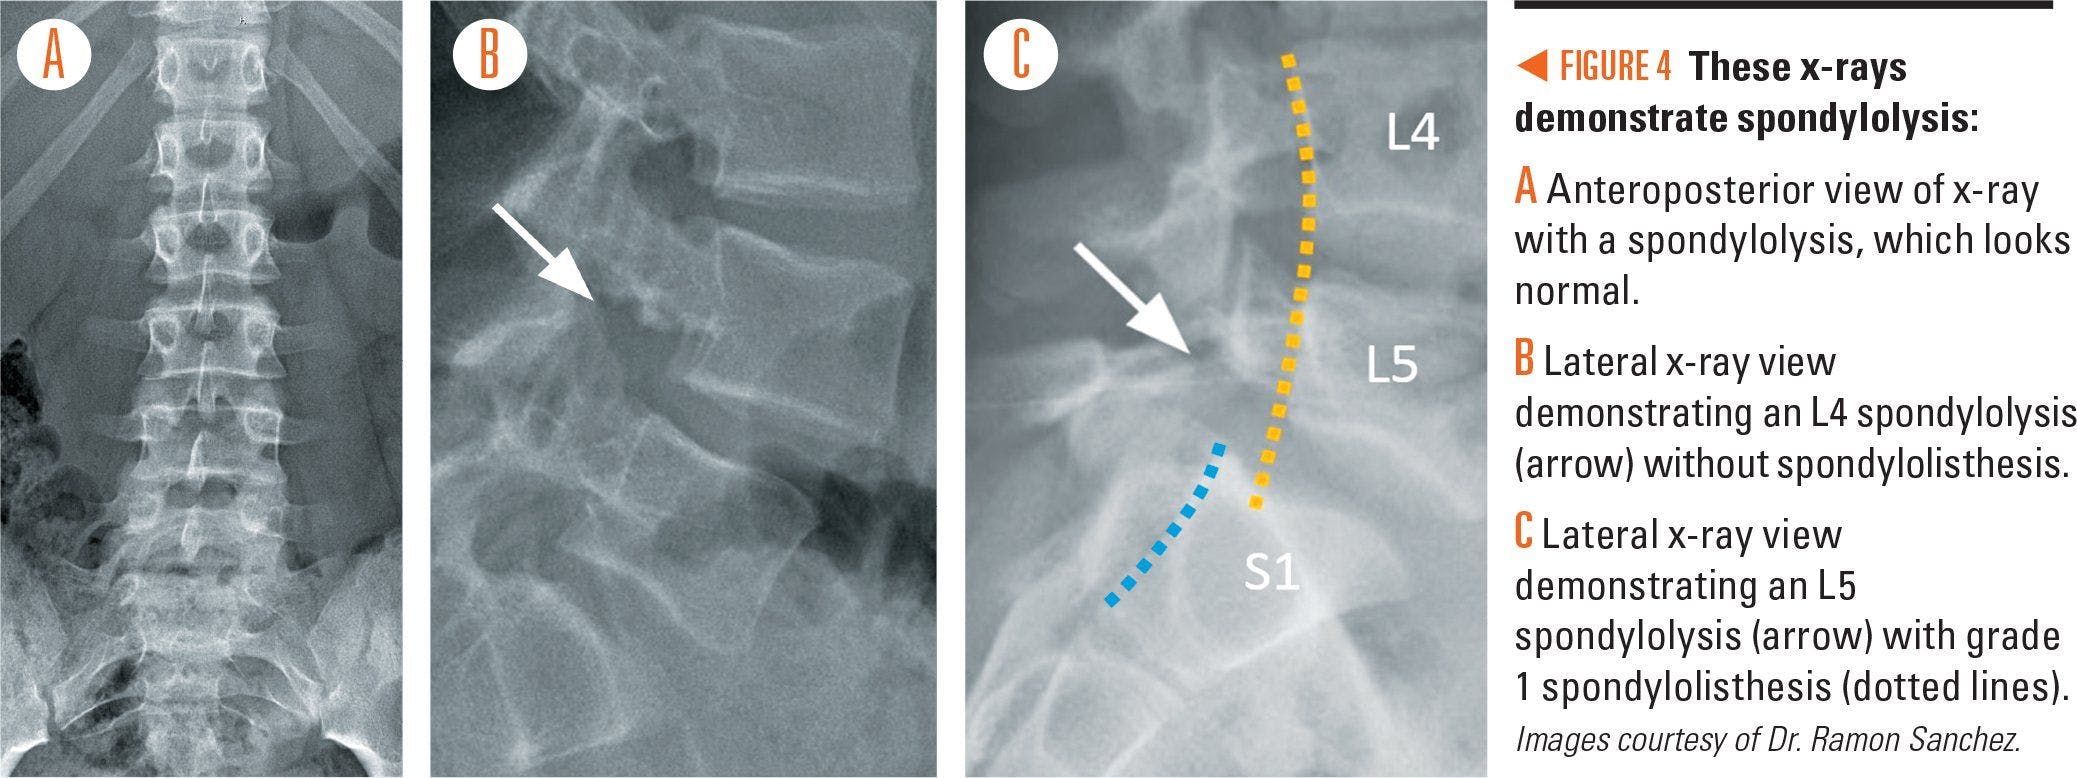 Series of X-rays showing spondylolysis